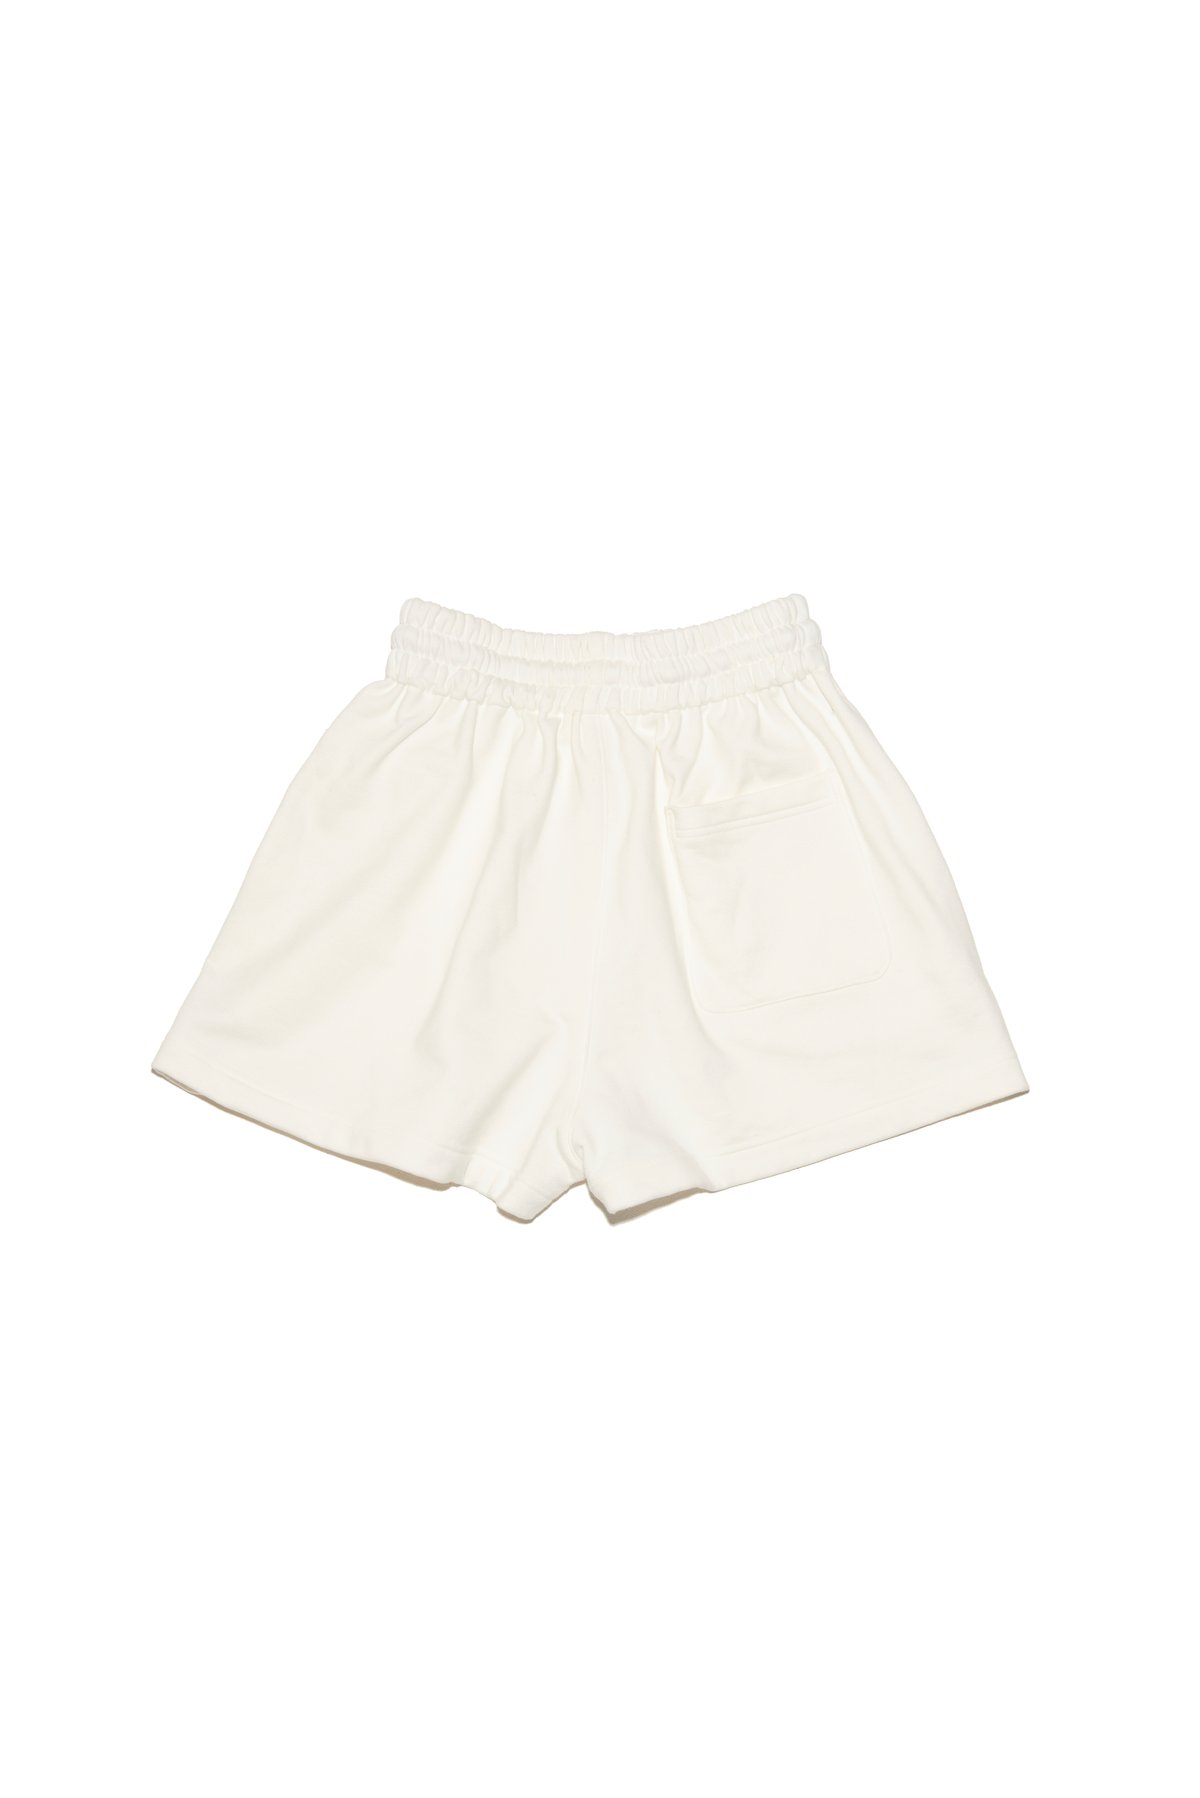 White Ivory shorts